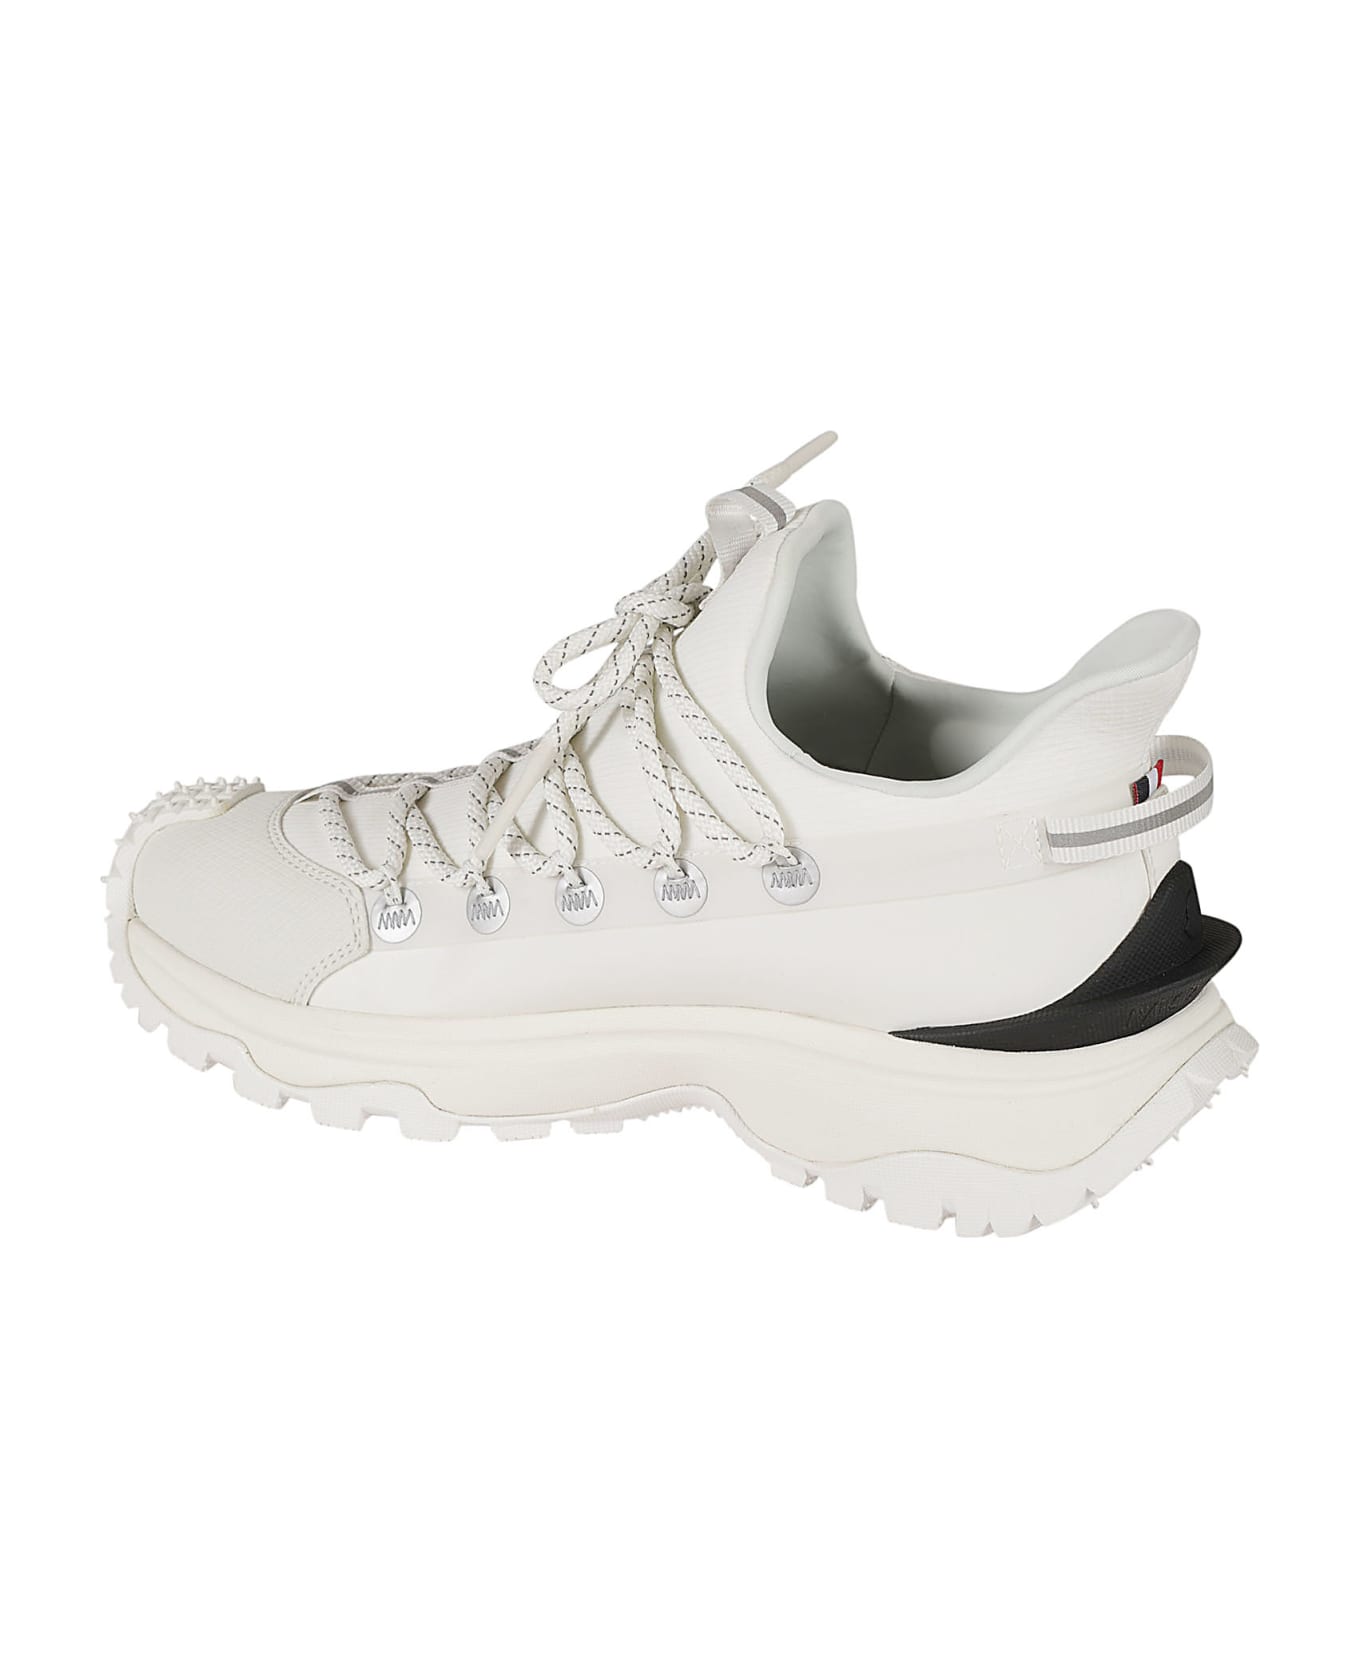 Moncler Trailgrip Lite2 Sneakers - Non definito